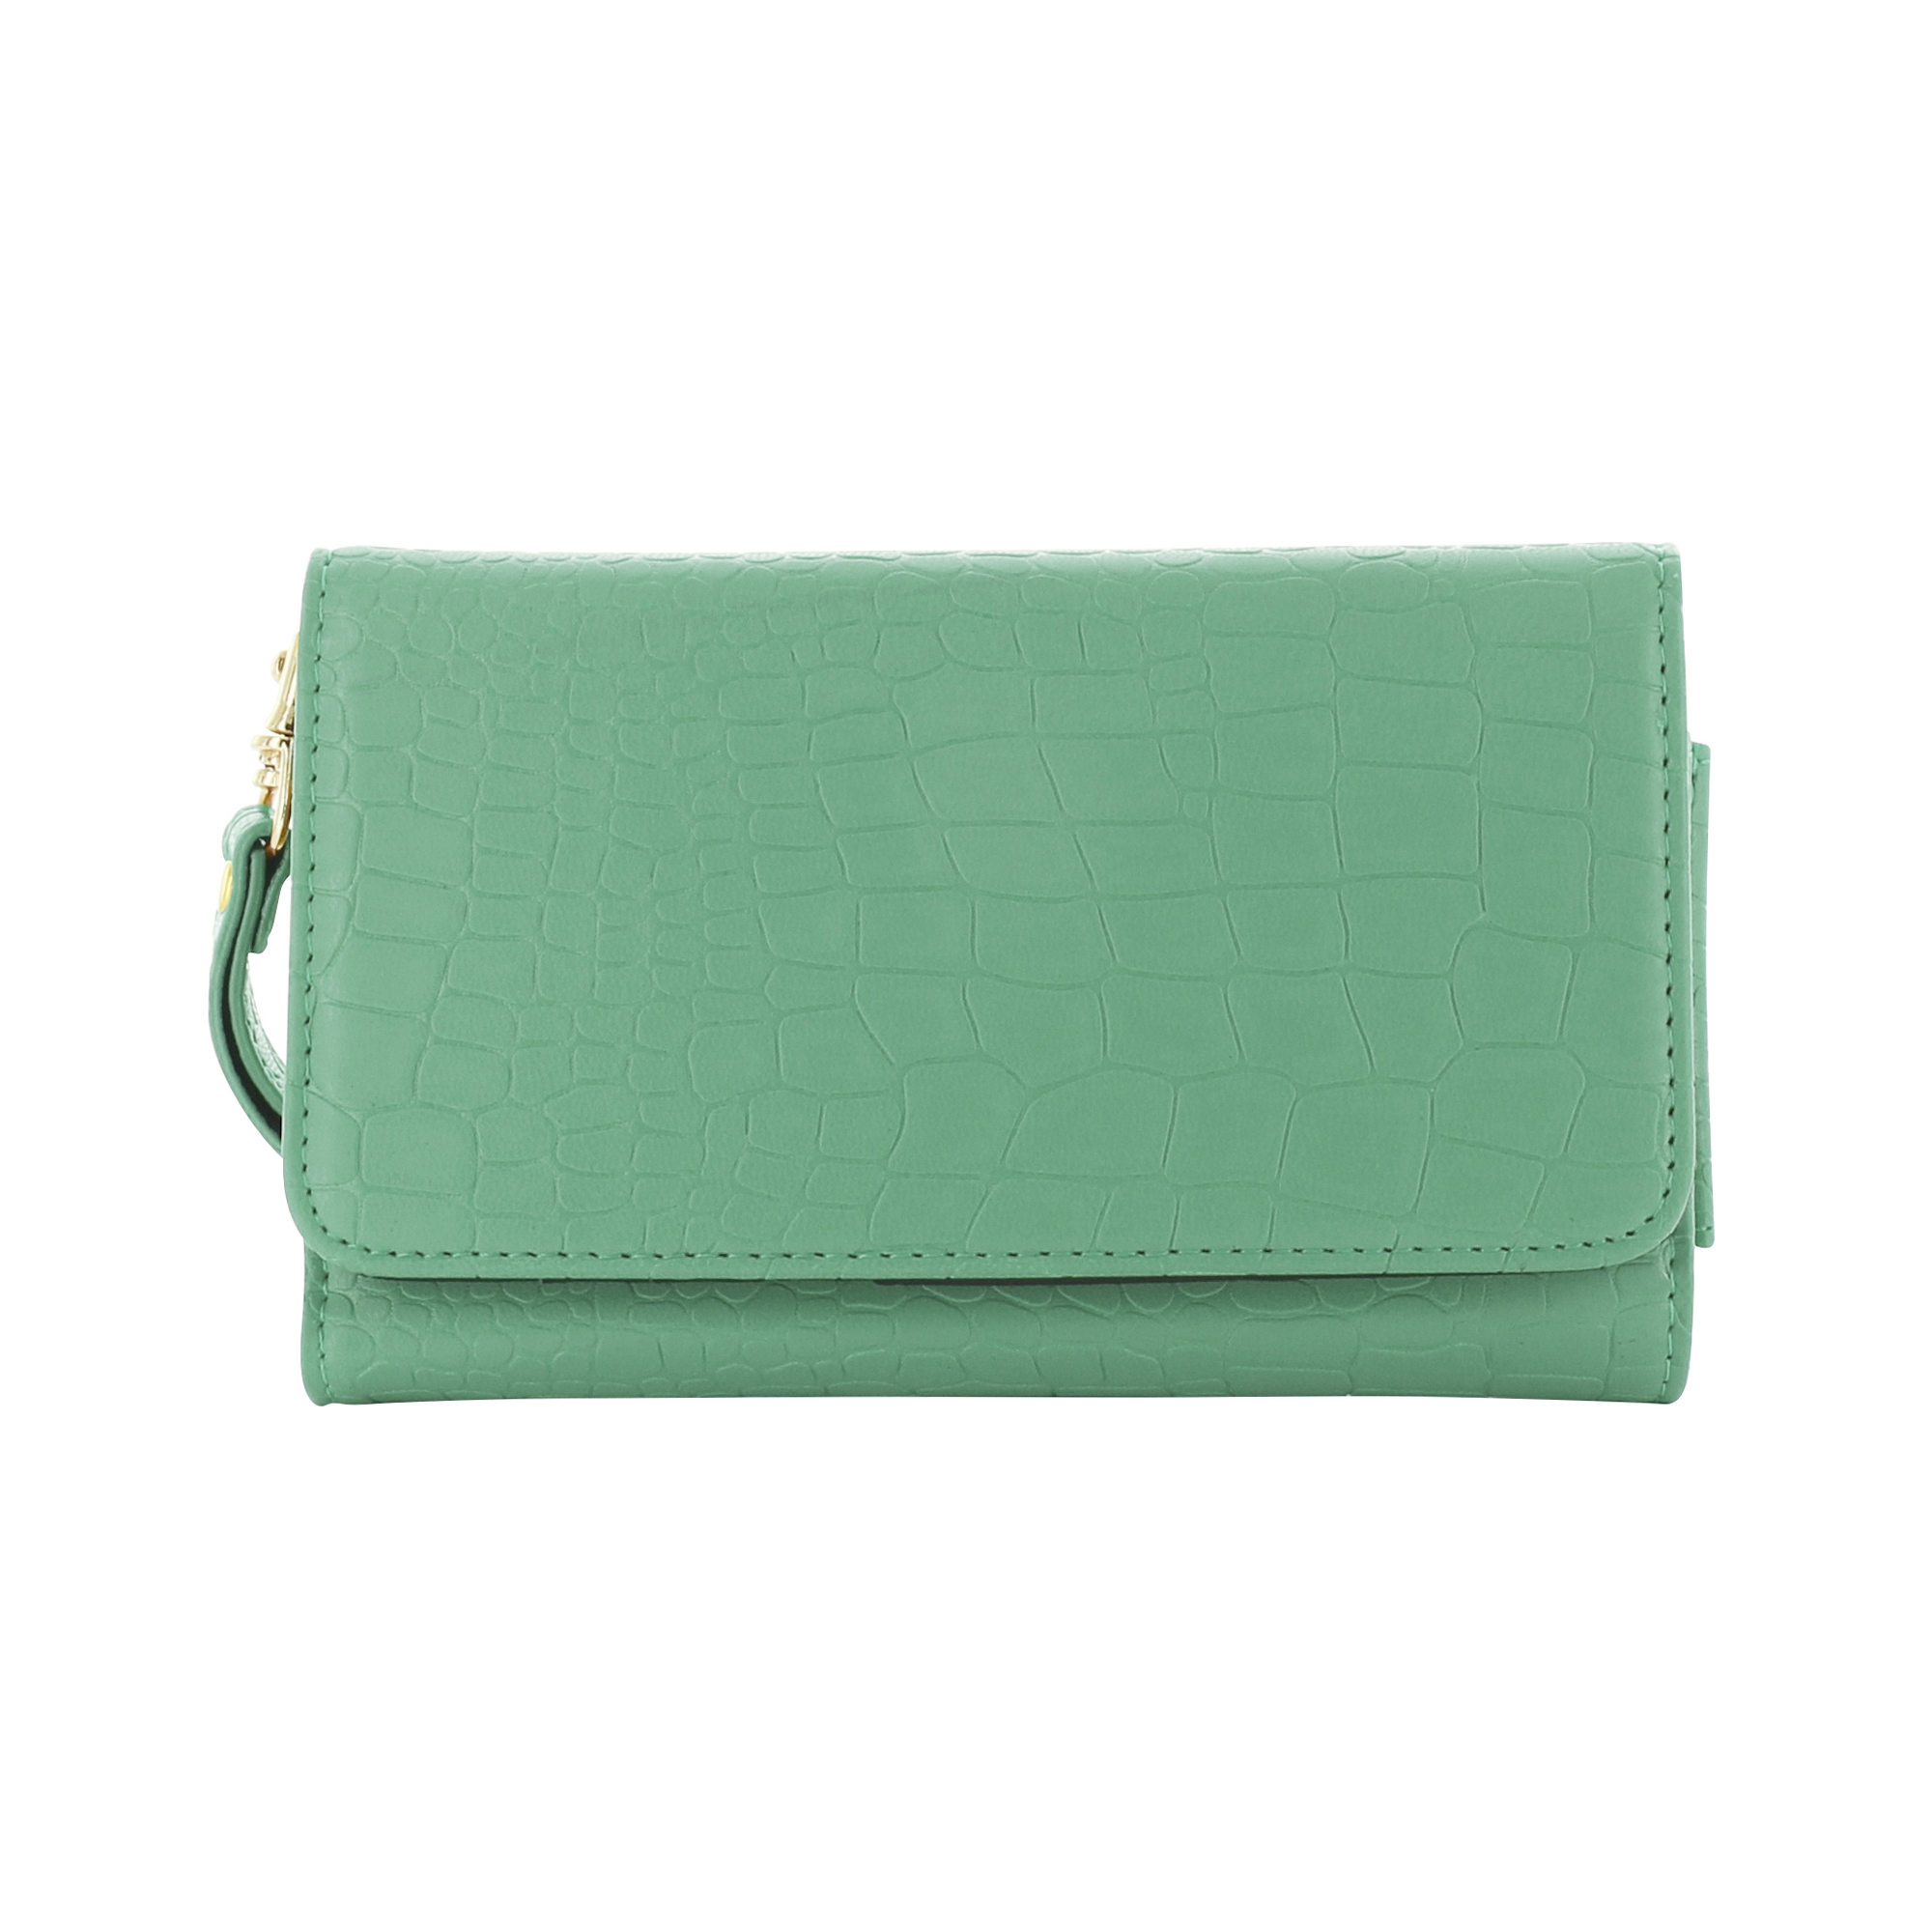 Universal phone purse, green croc